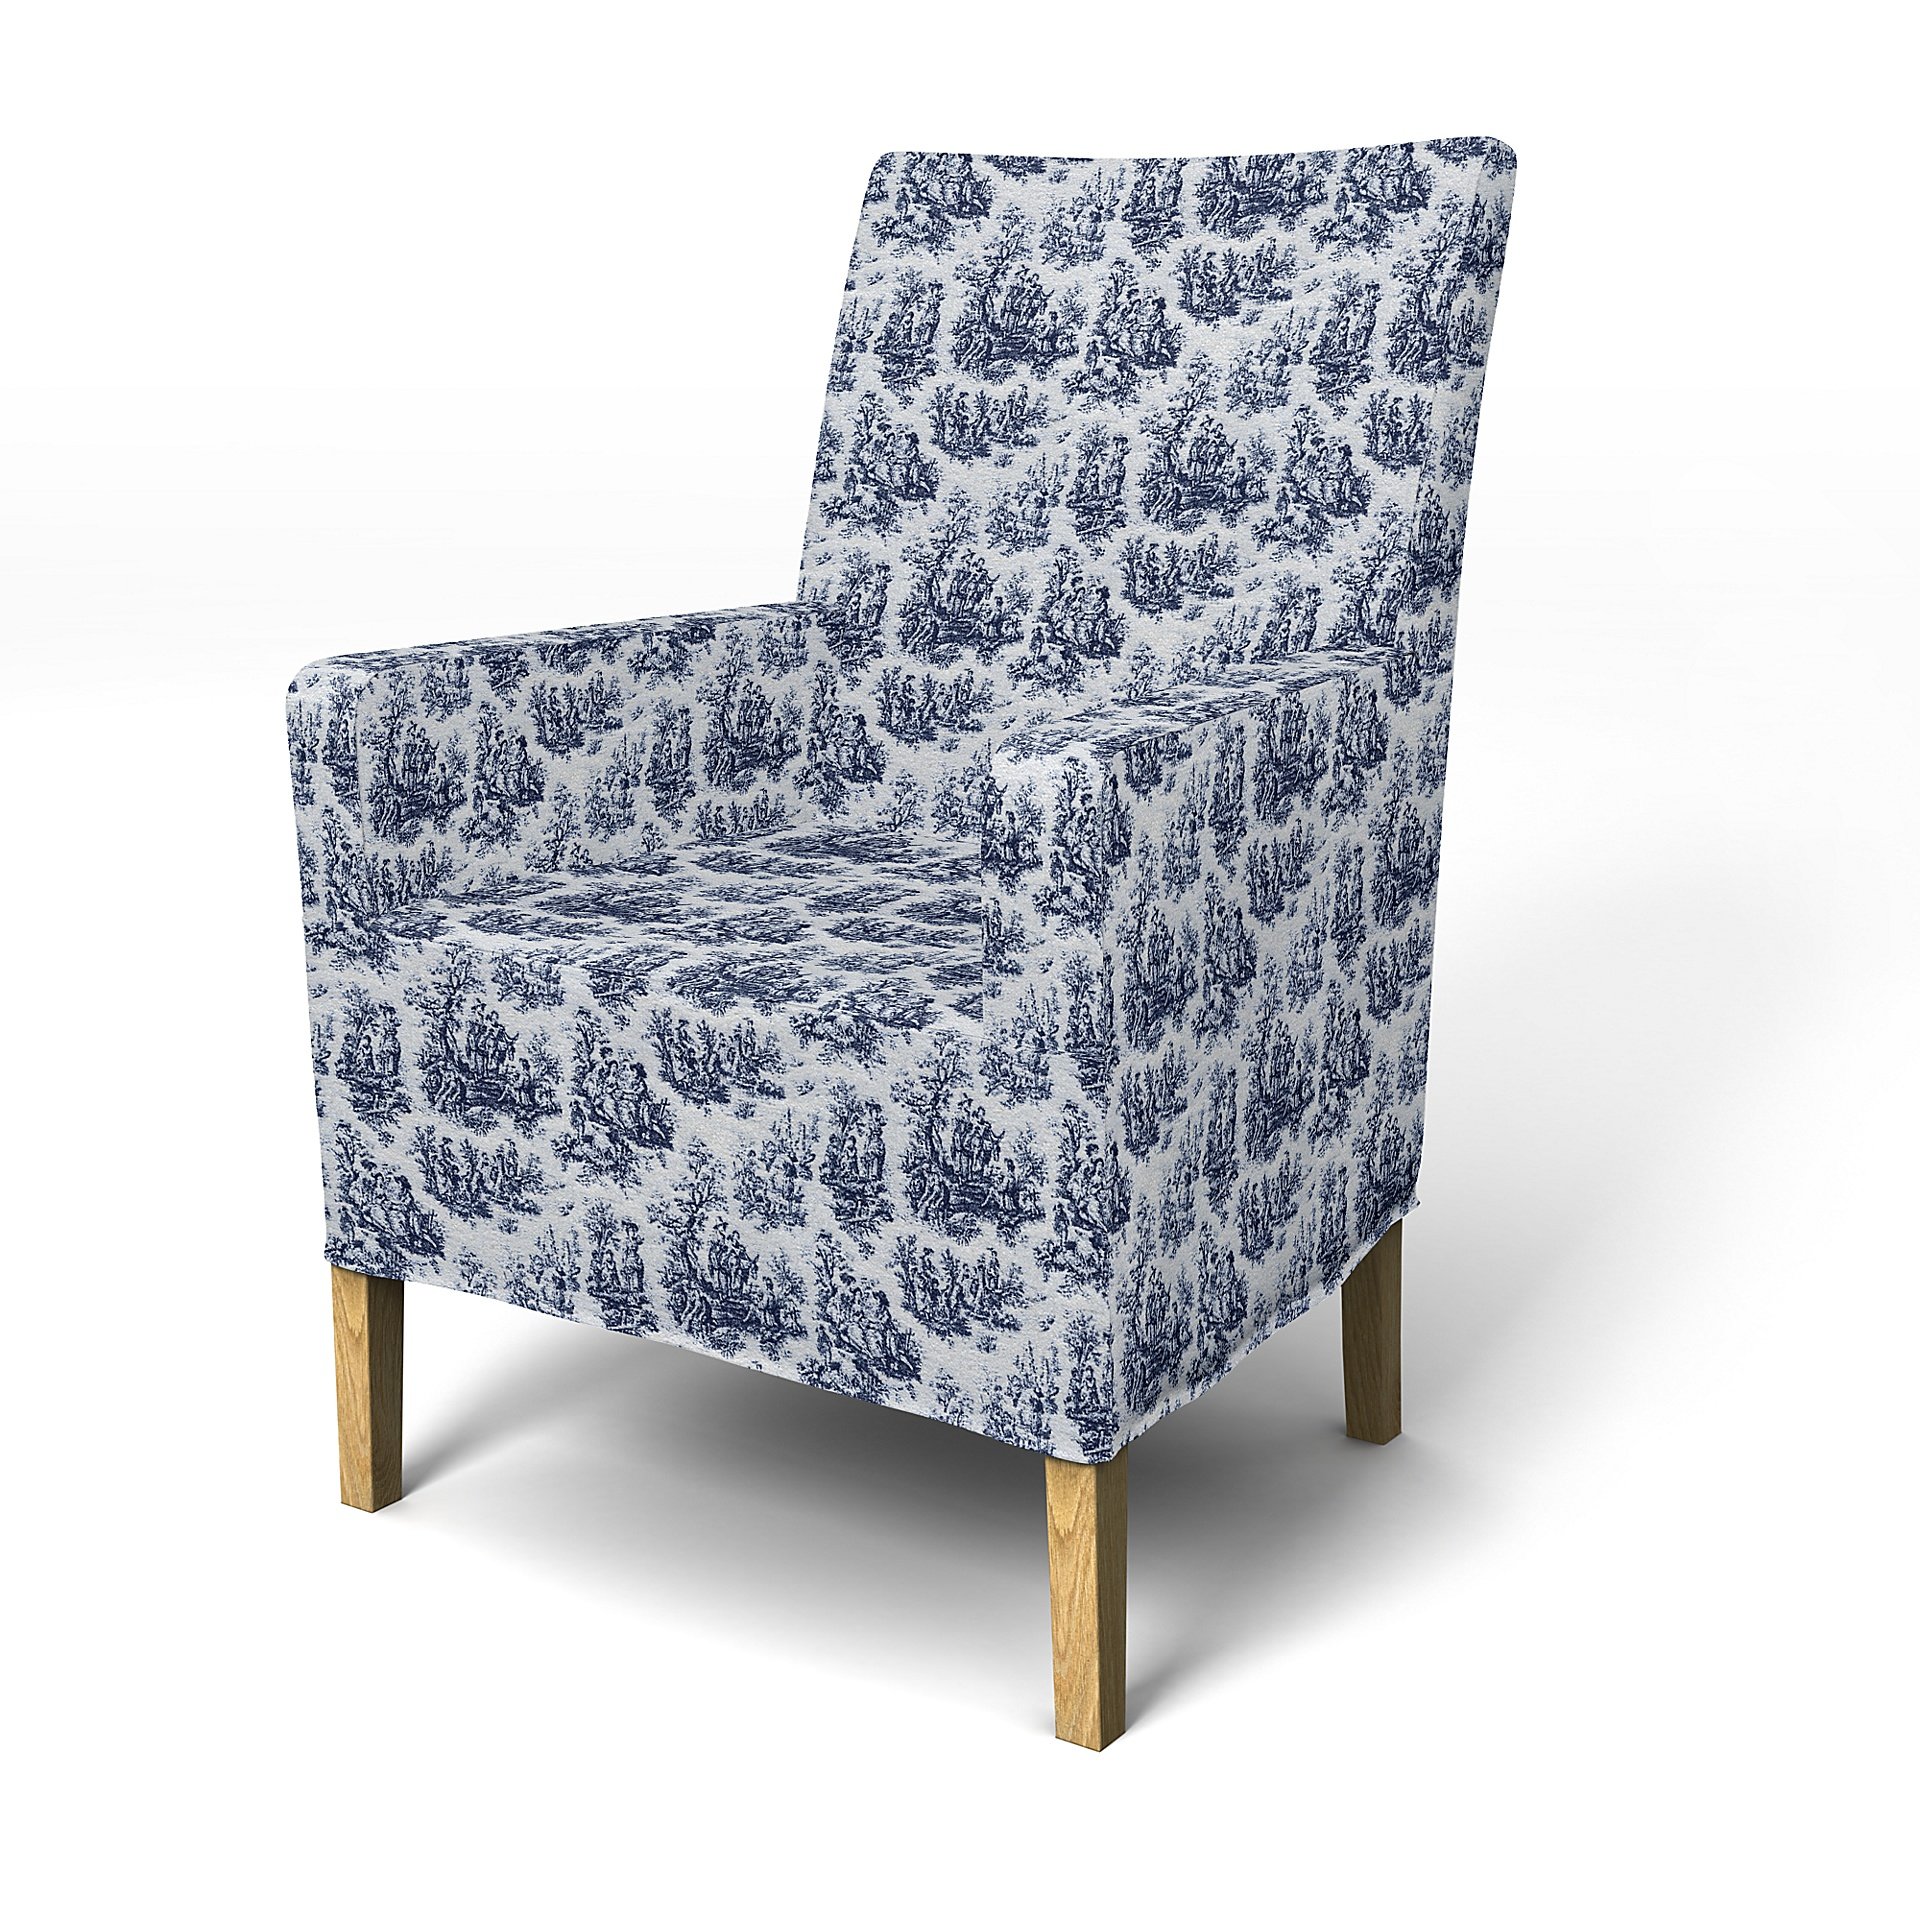 IKEA - Henriksdal, Chair cover w/ armrest, medium length skirt, Dark Blue, Boucle & Texture - Bemz